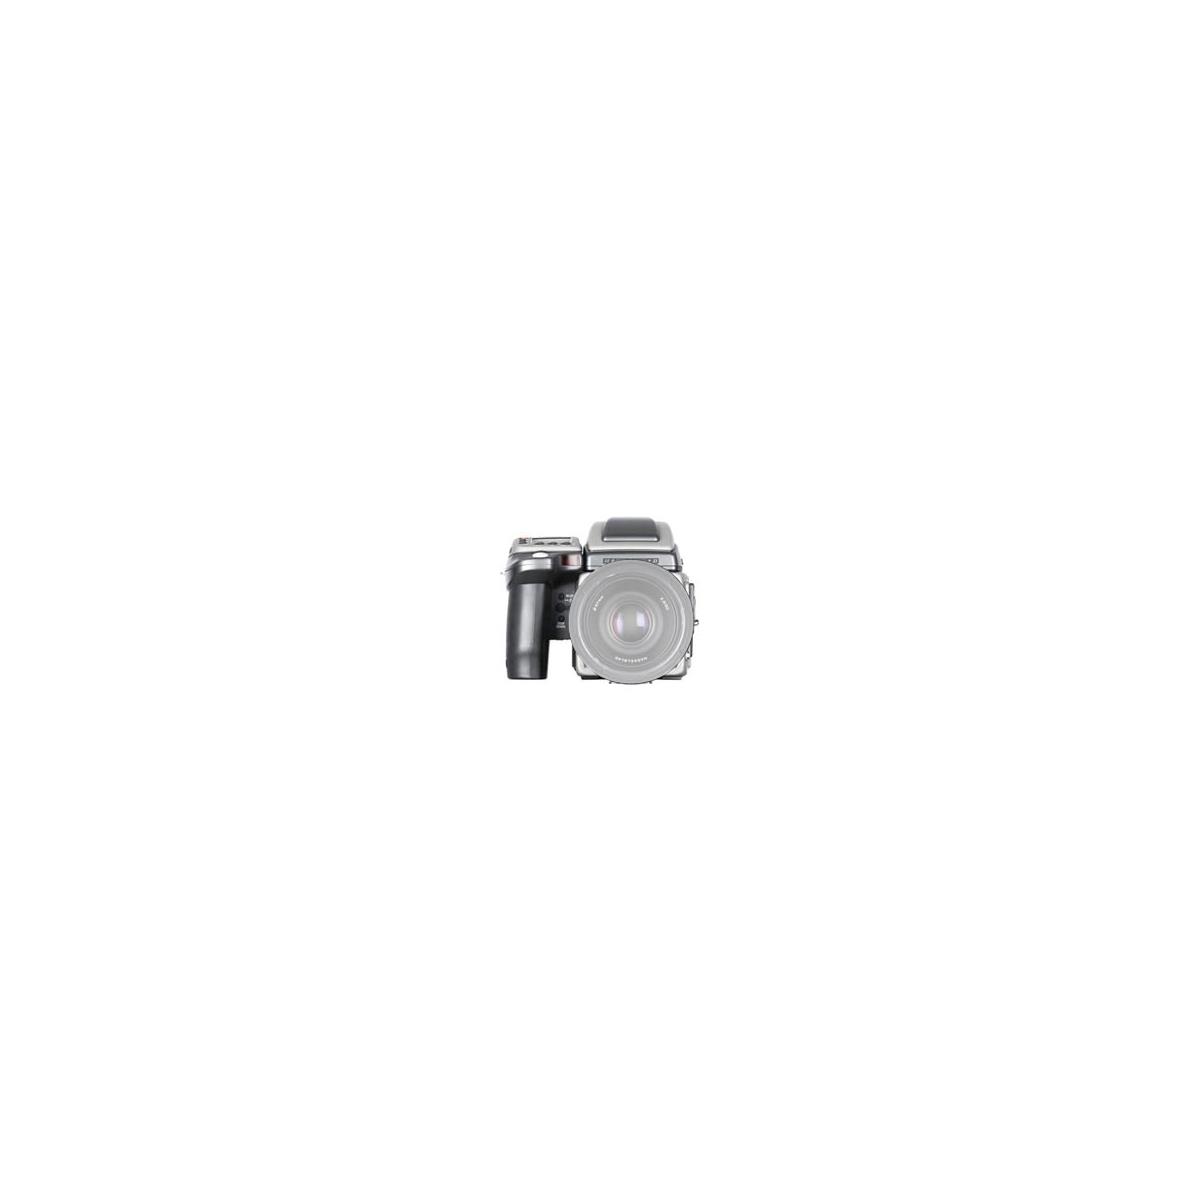 Image of Hasselblad H2 645AF Medium Format Auto Focus Camera Body - USA #13100